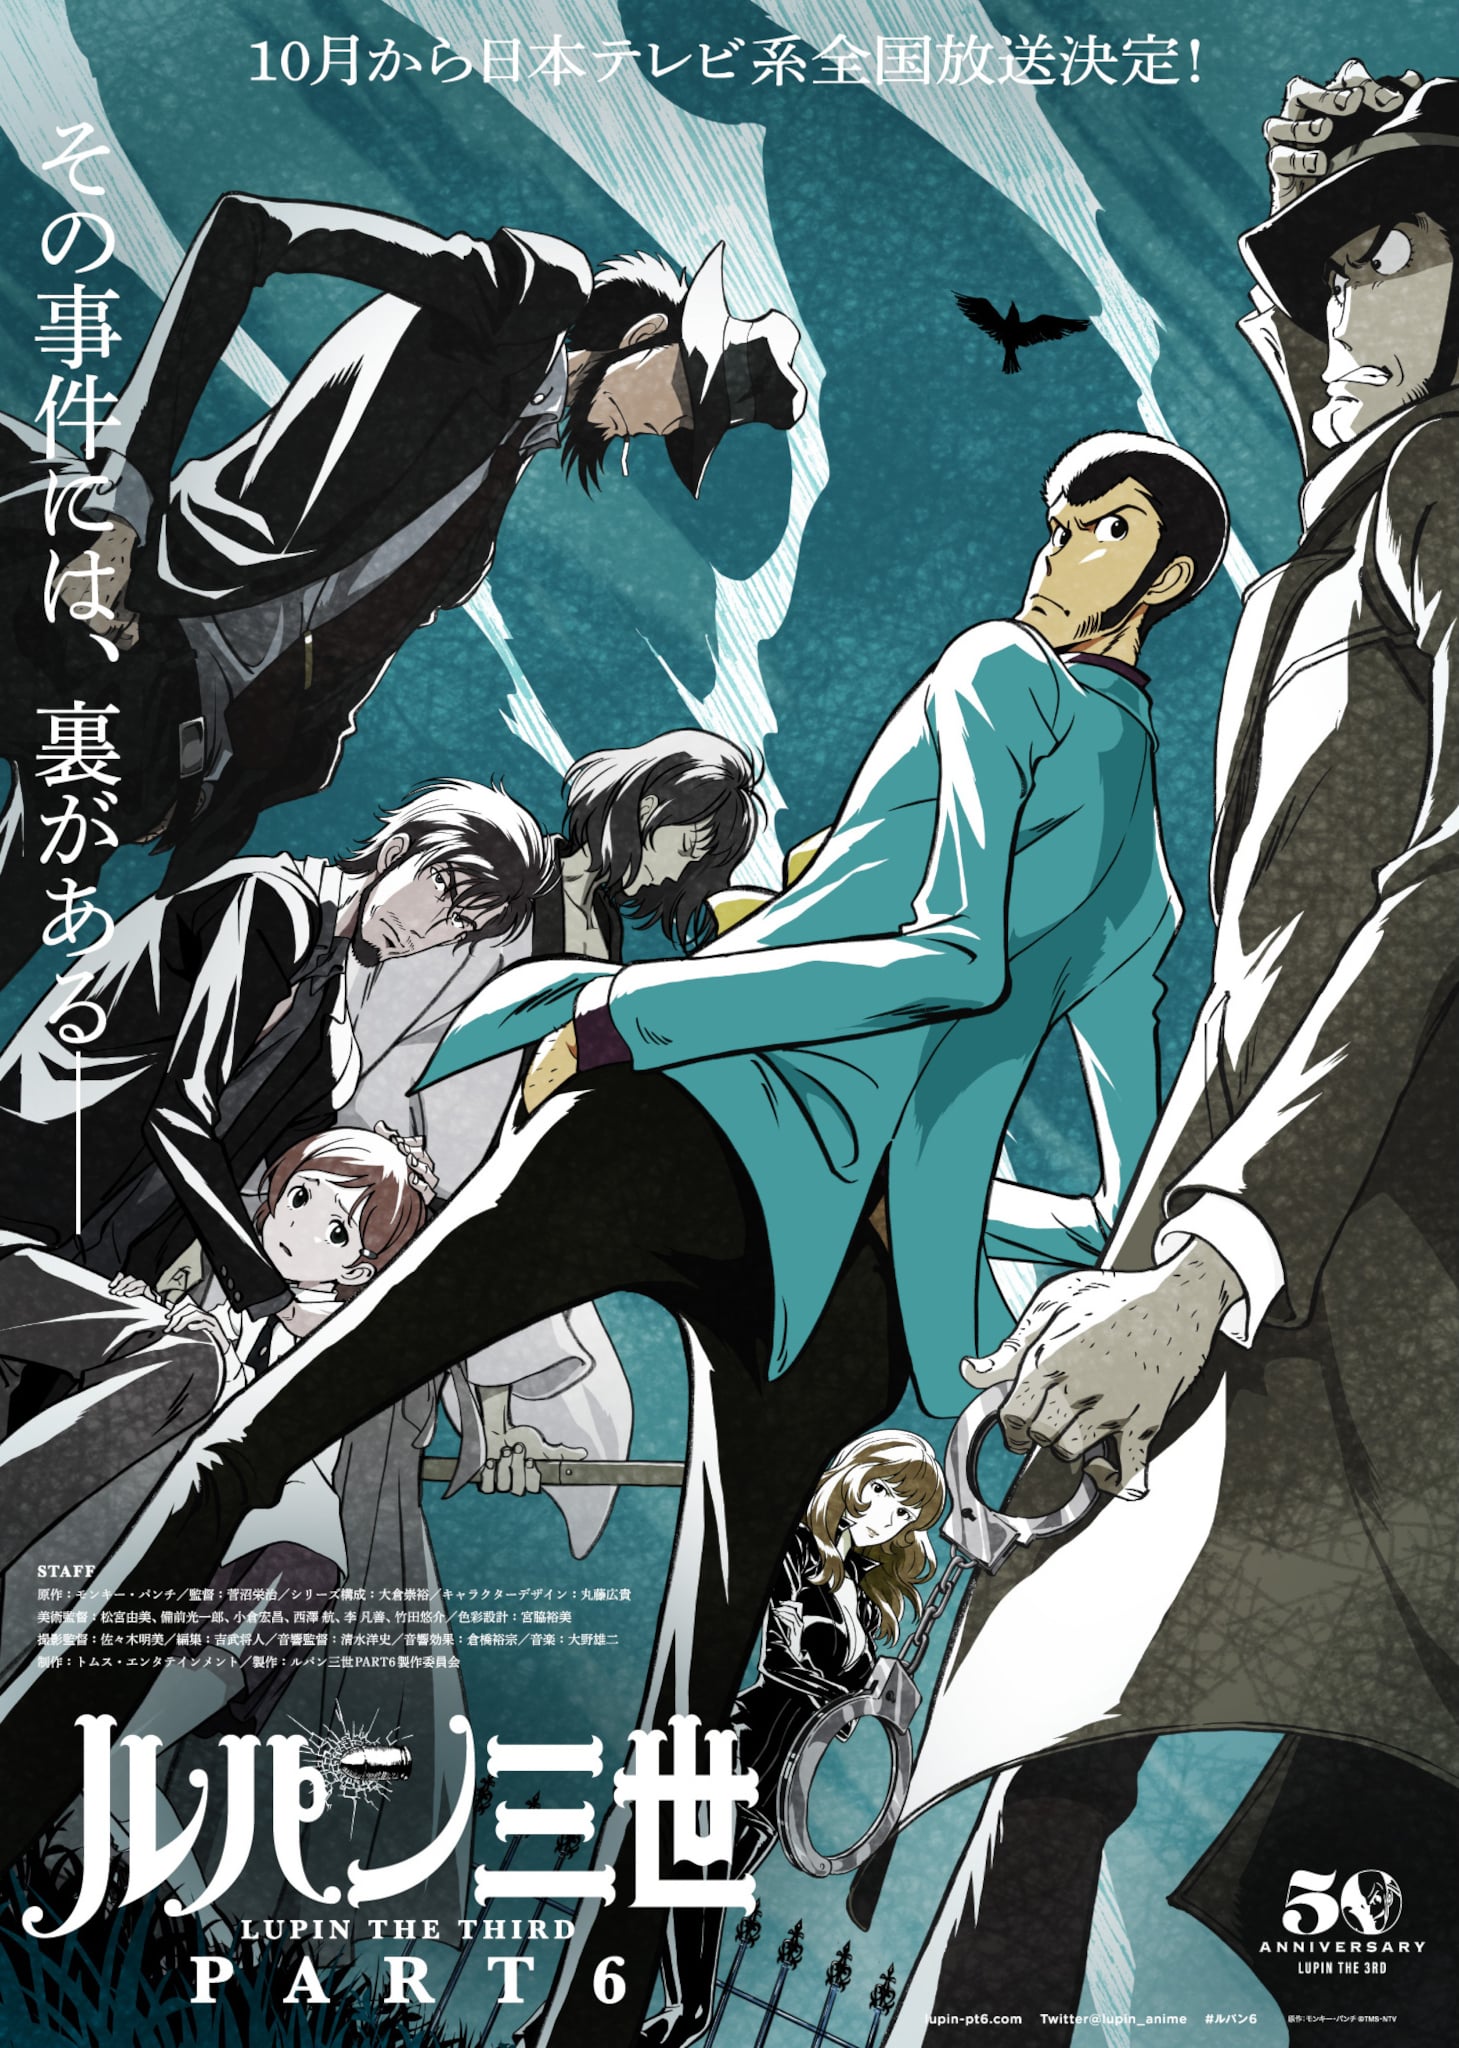 Annonce de la date de sortie de anime Lupin III - Partie 6